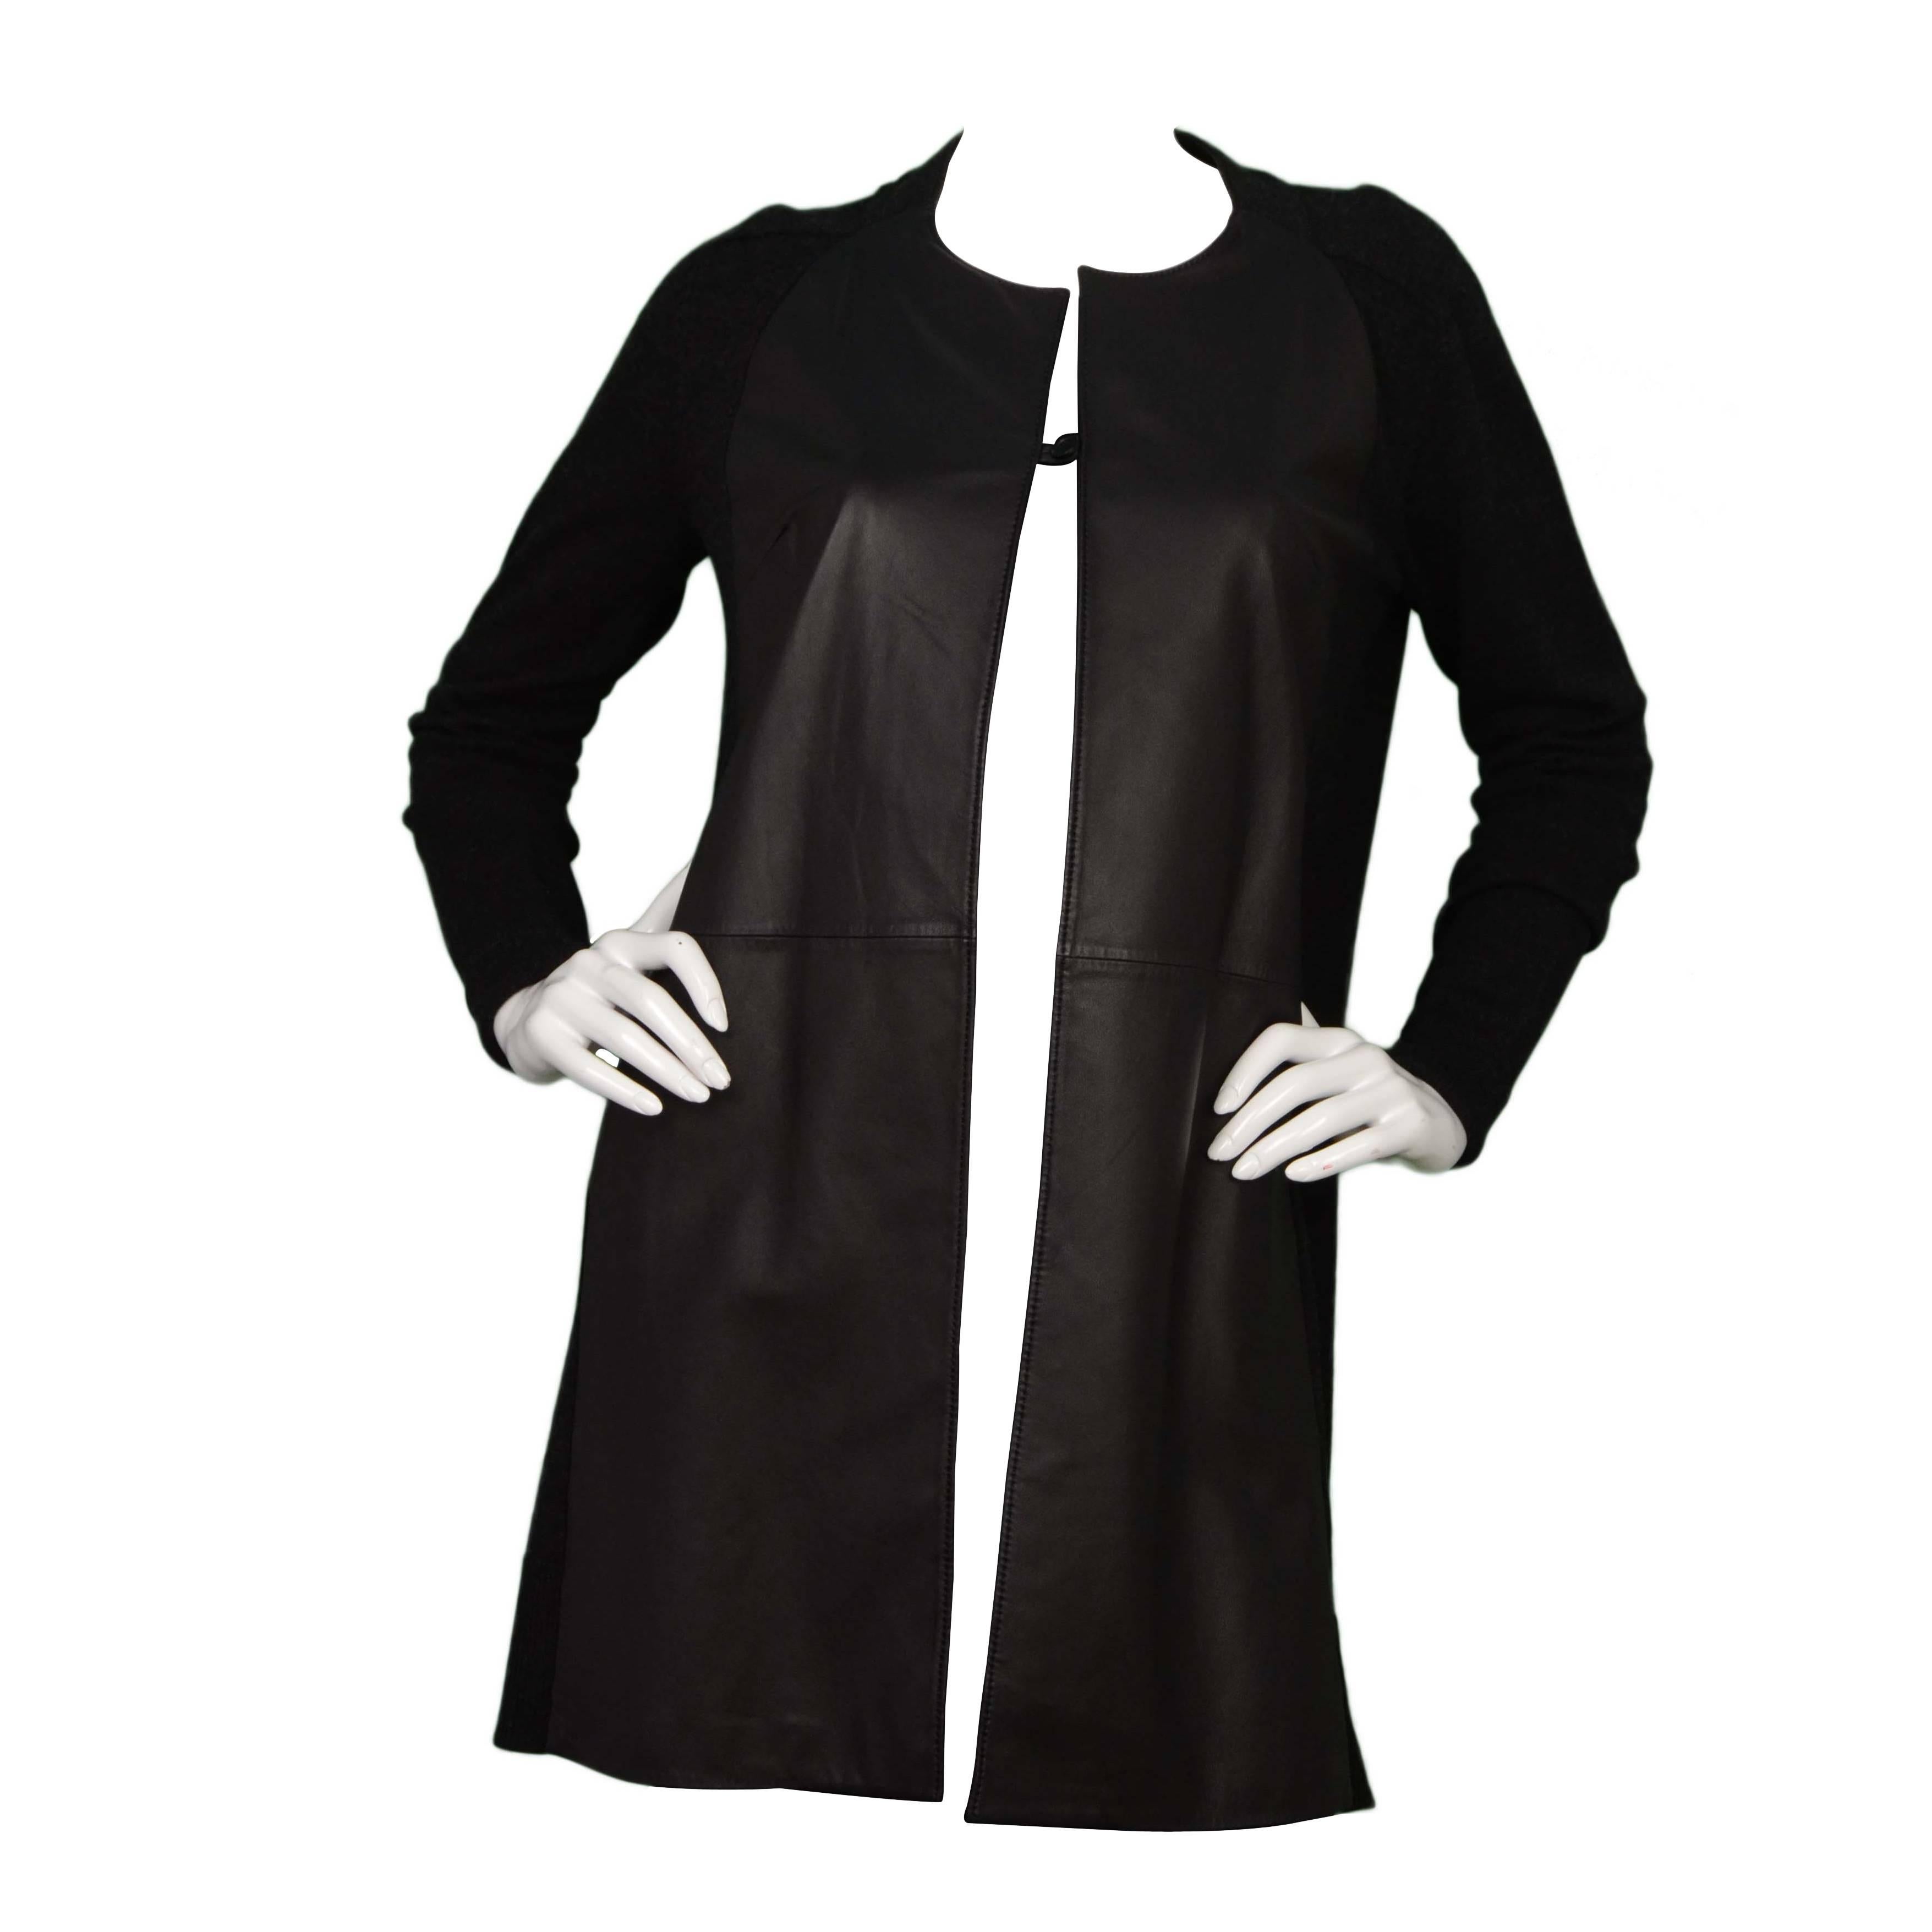 M. Patmos Black Leather Paneled Long Sweater sz M rt. $1, 650